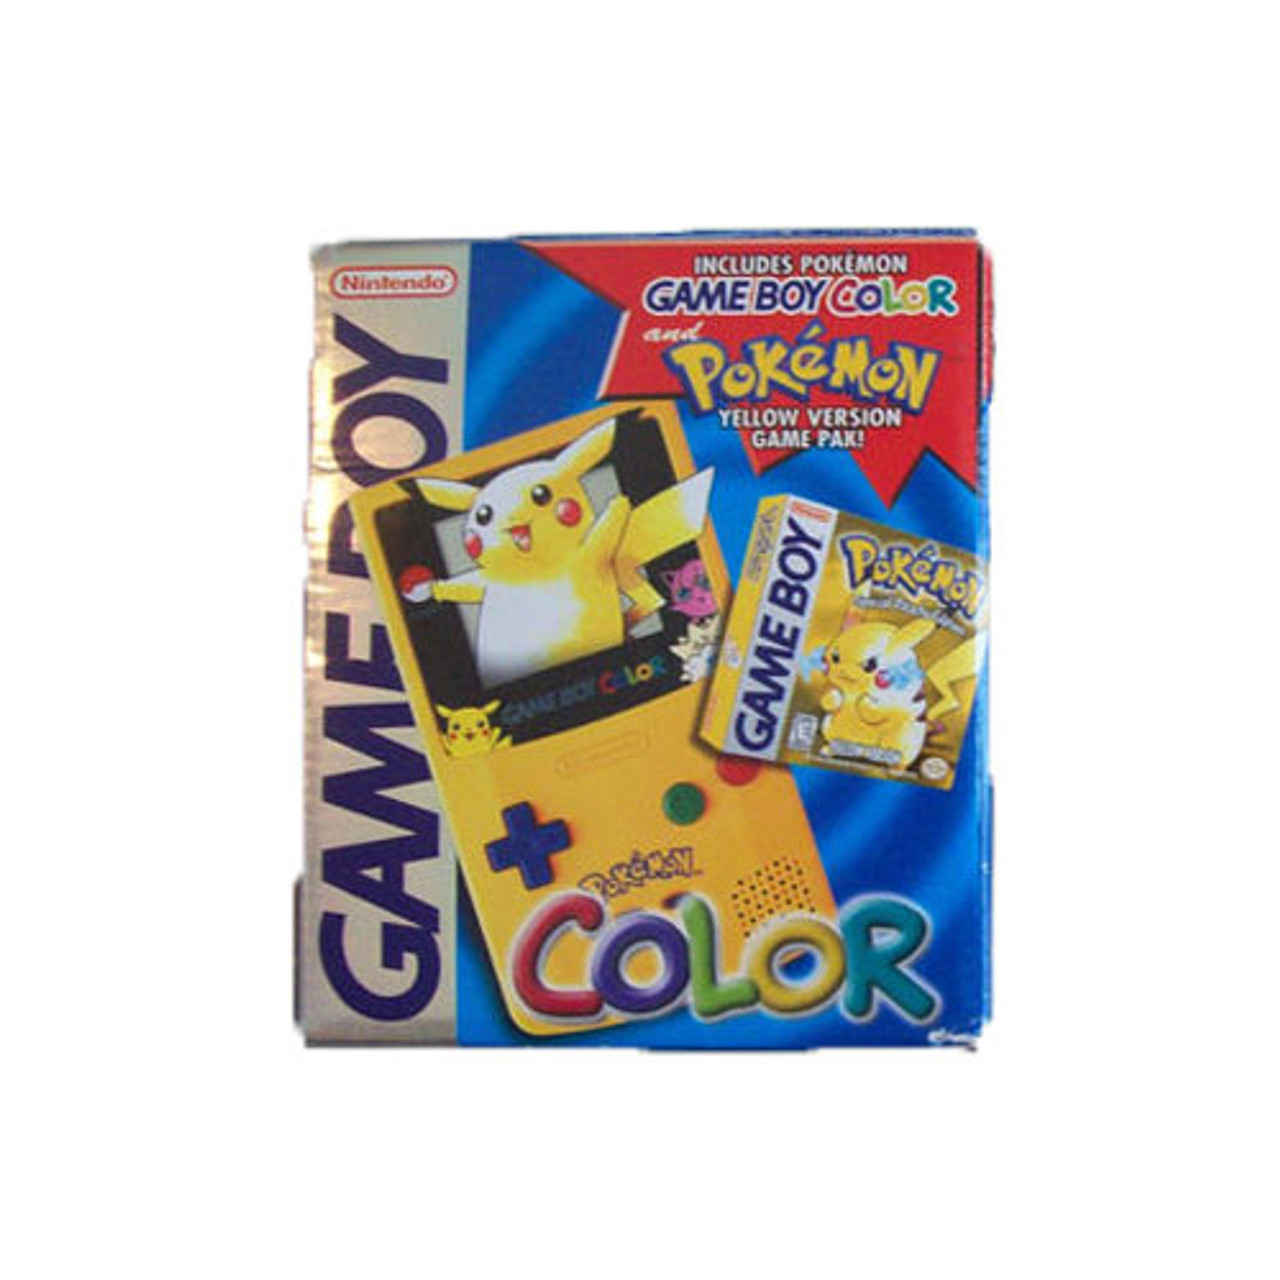 Pokemon Yellow Pikachu Edition for Original Gameboy